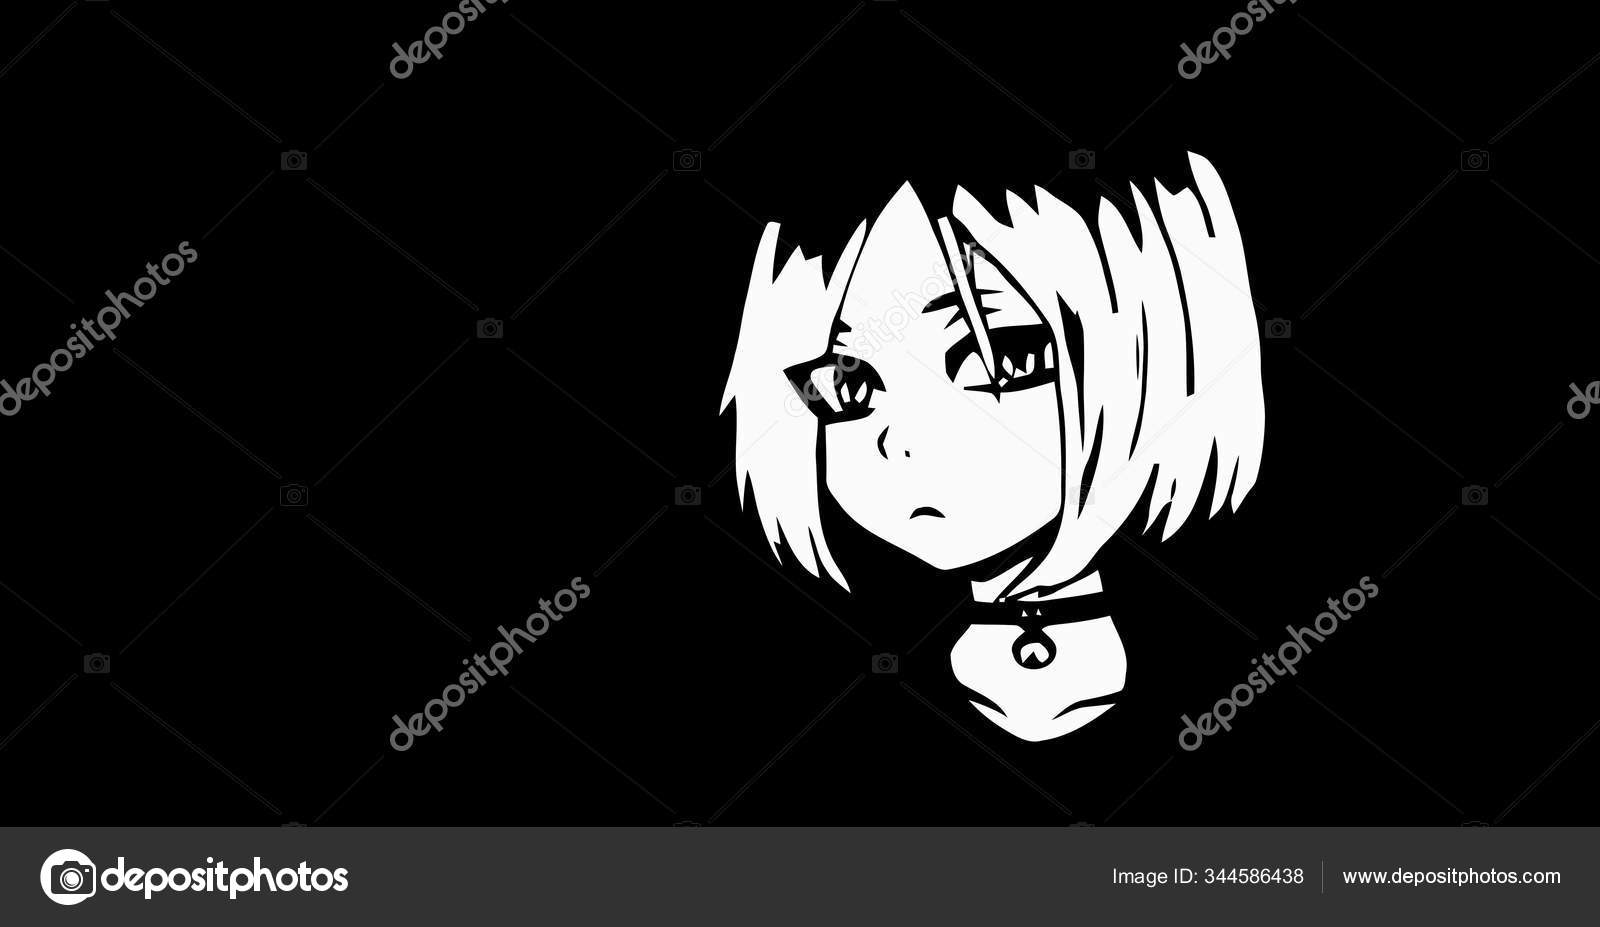 Anime Wallpapers Black White Anime Cute Boy Transgender Manga Style Stock Photo C Satoshy 344586438,Single Story Modern 5 Bedroom House Plans